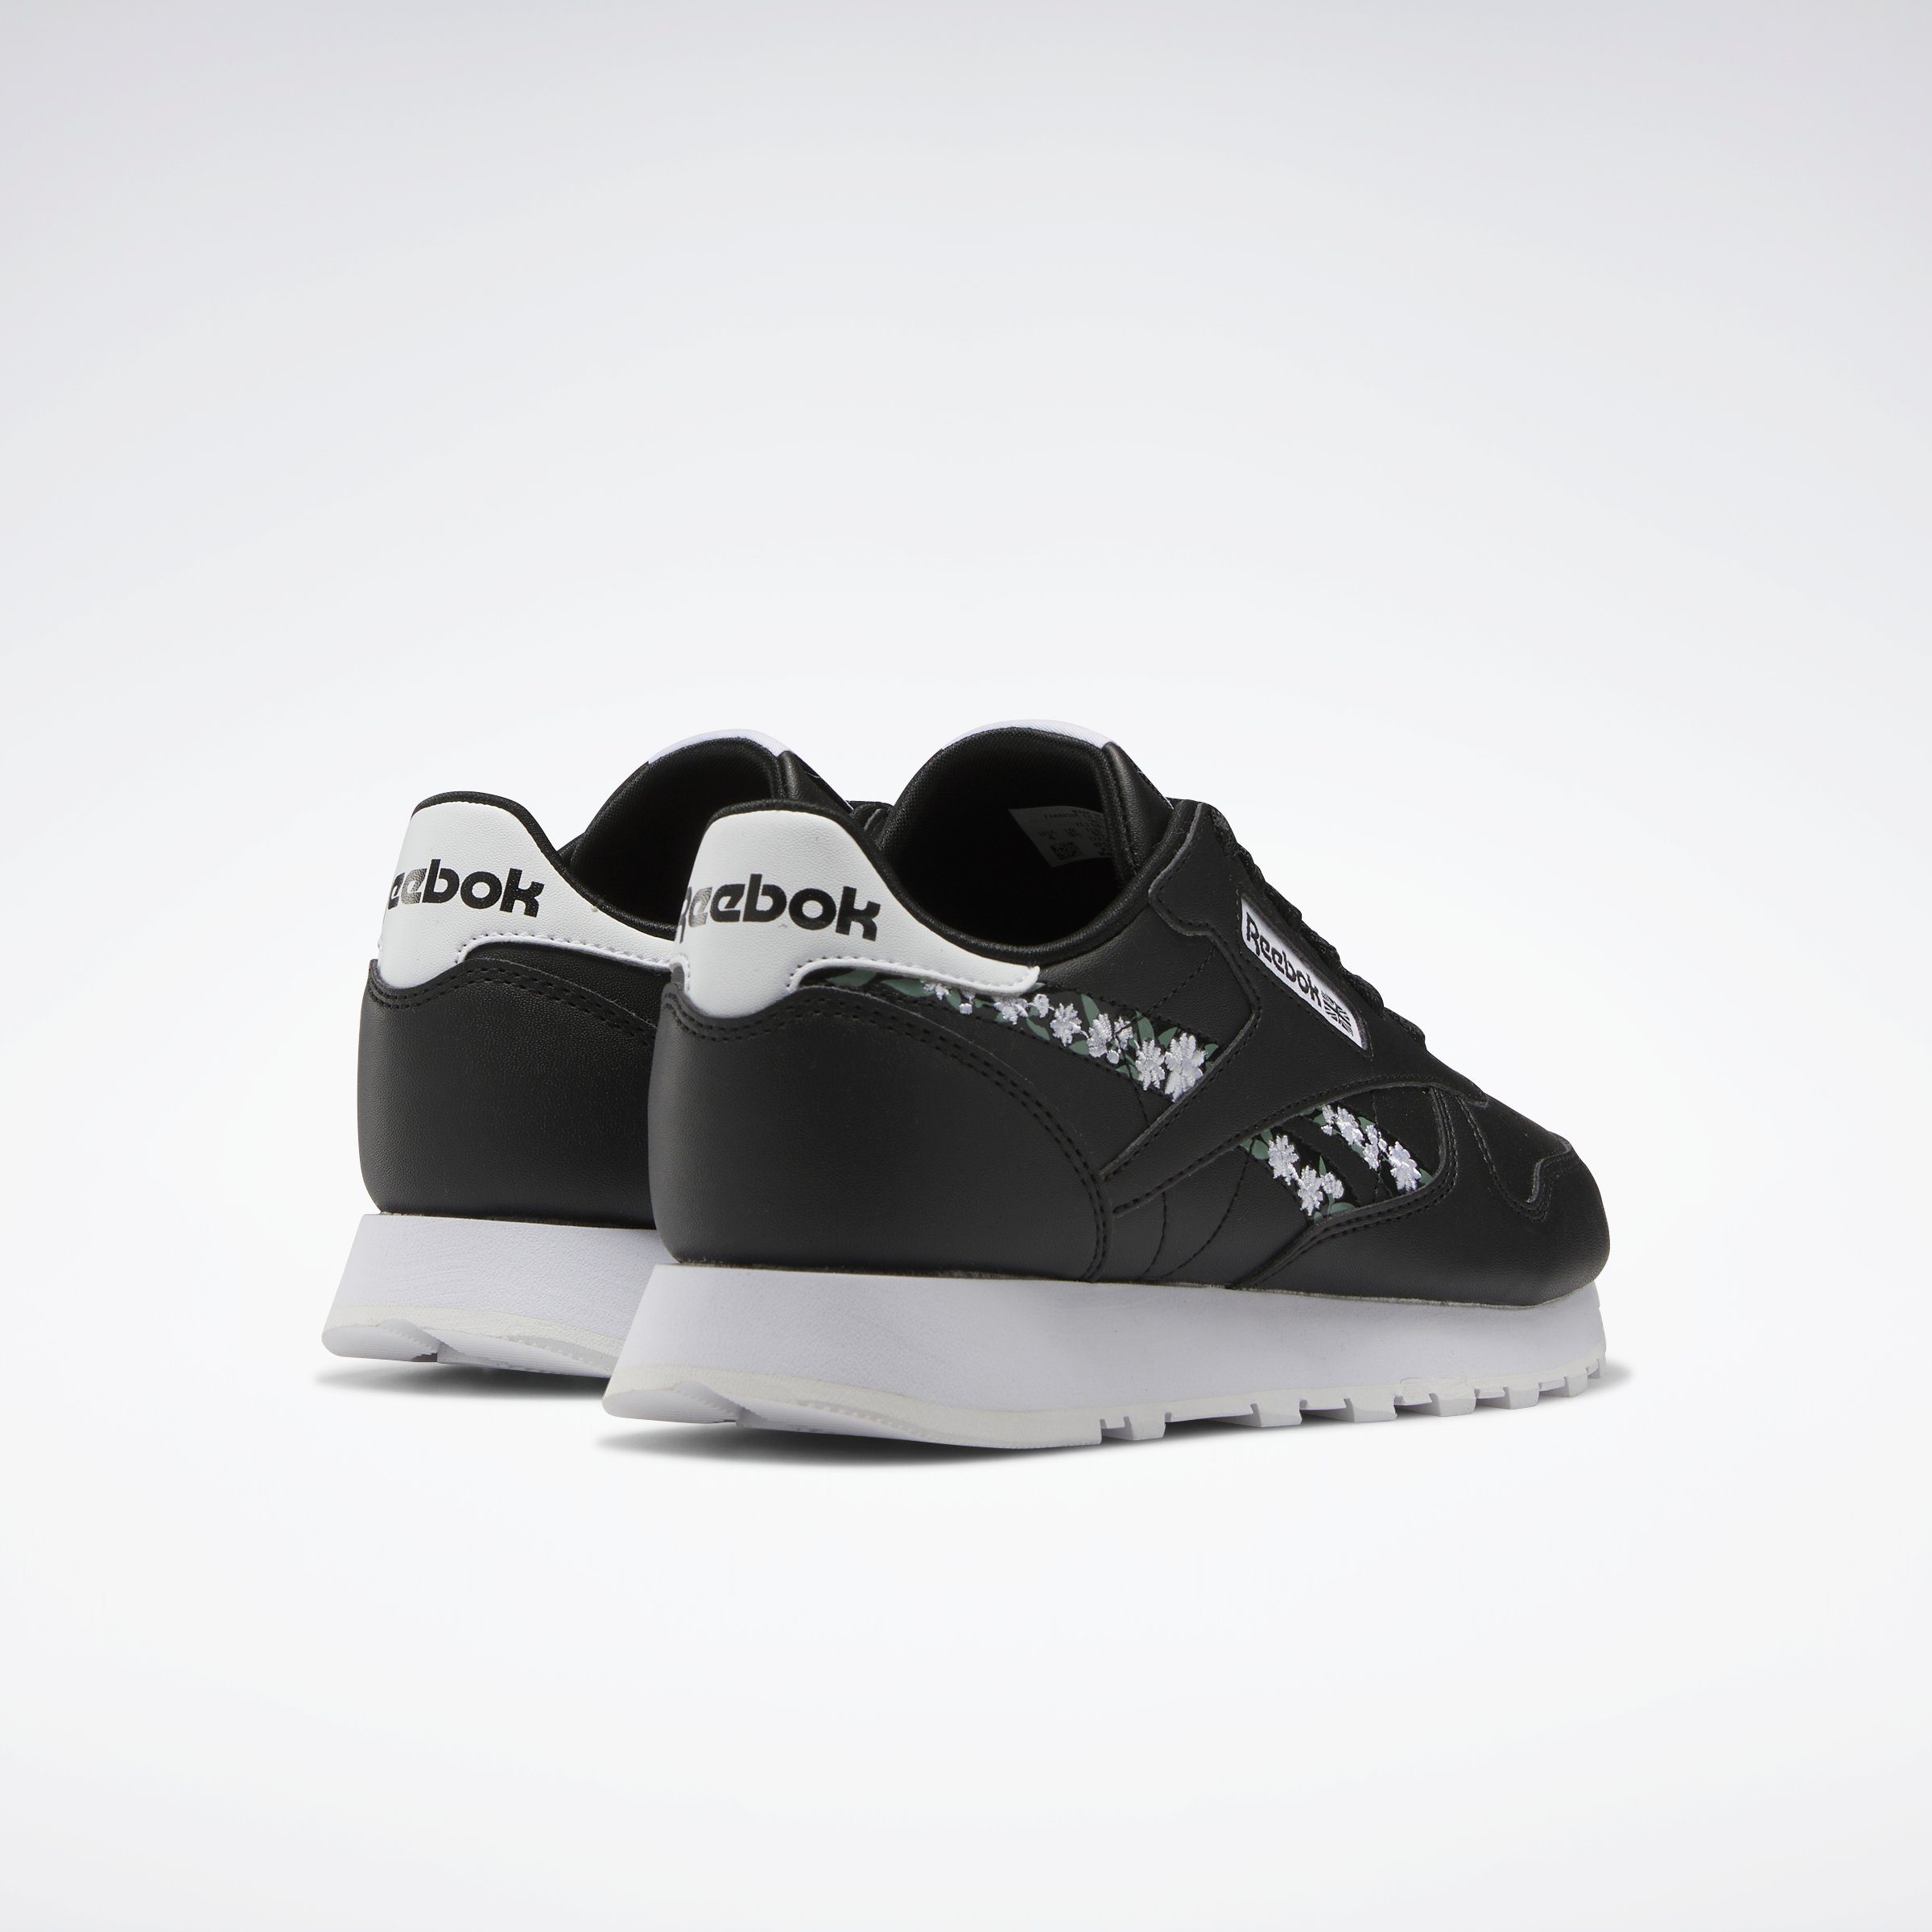 Reebok Classic schwarz CLASSIC Sneaker LEATHER